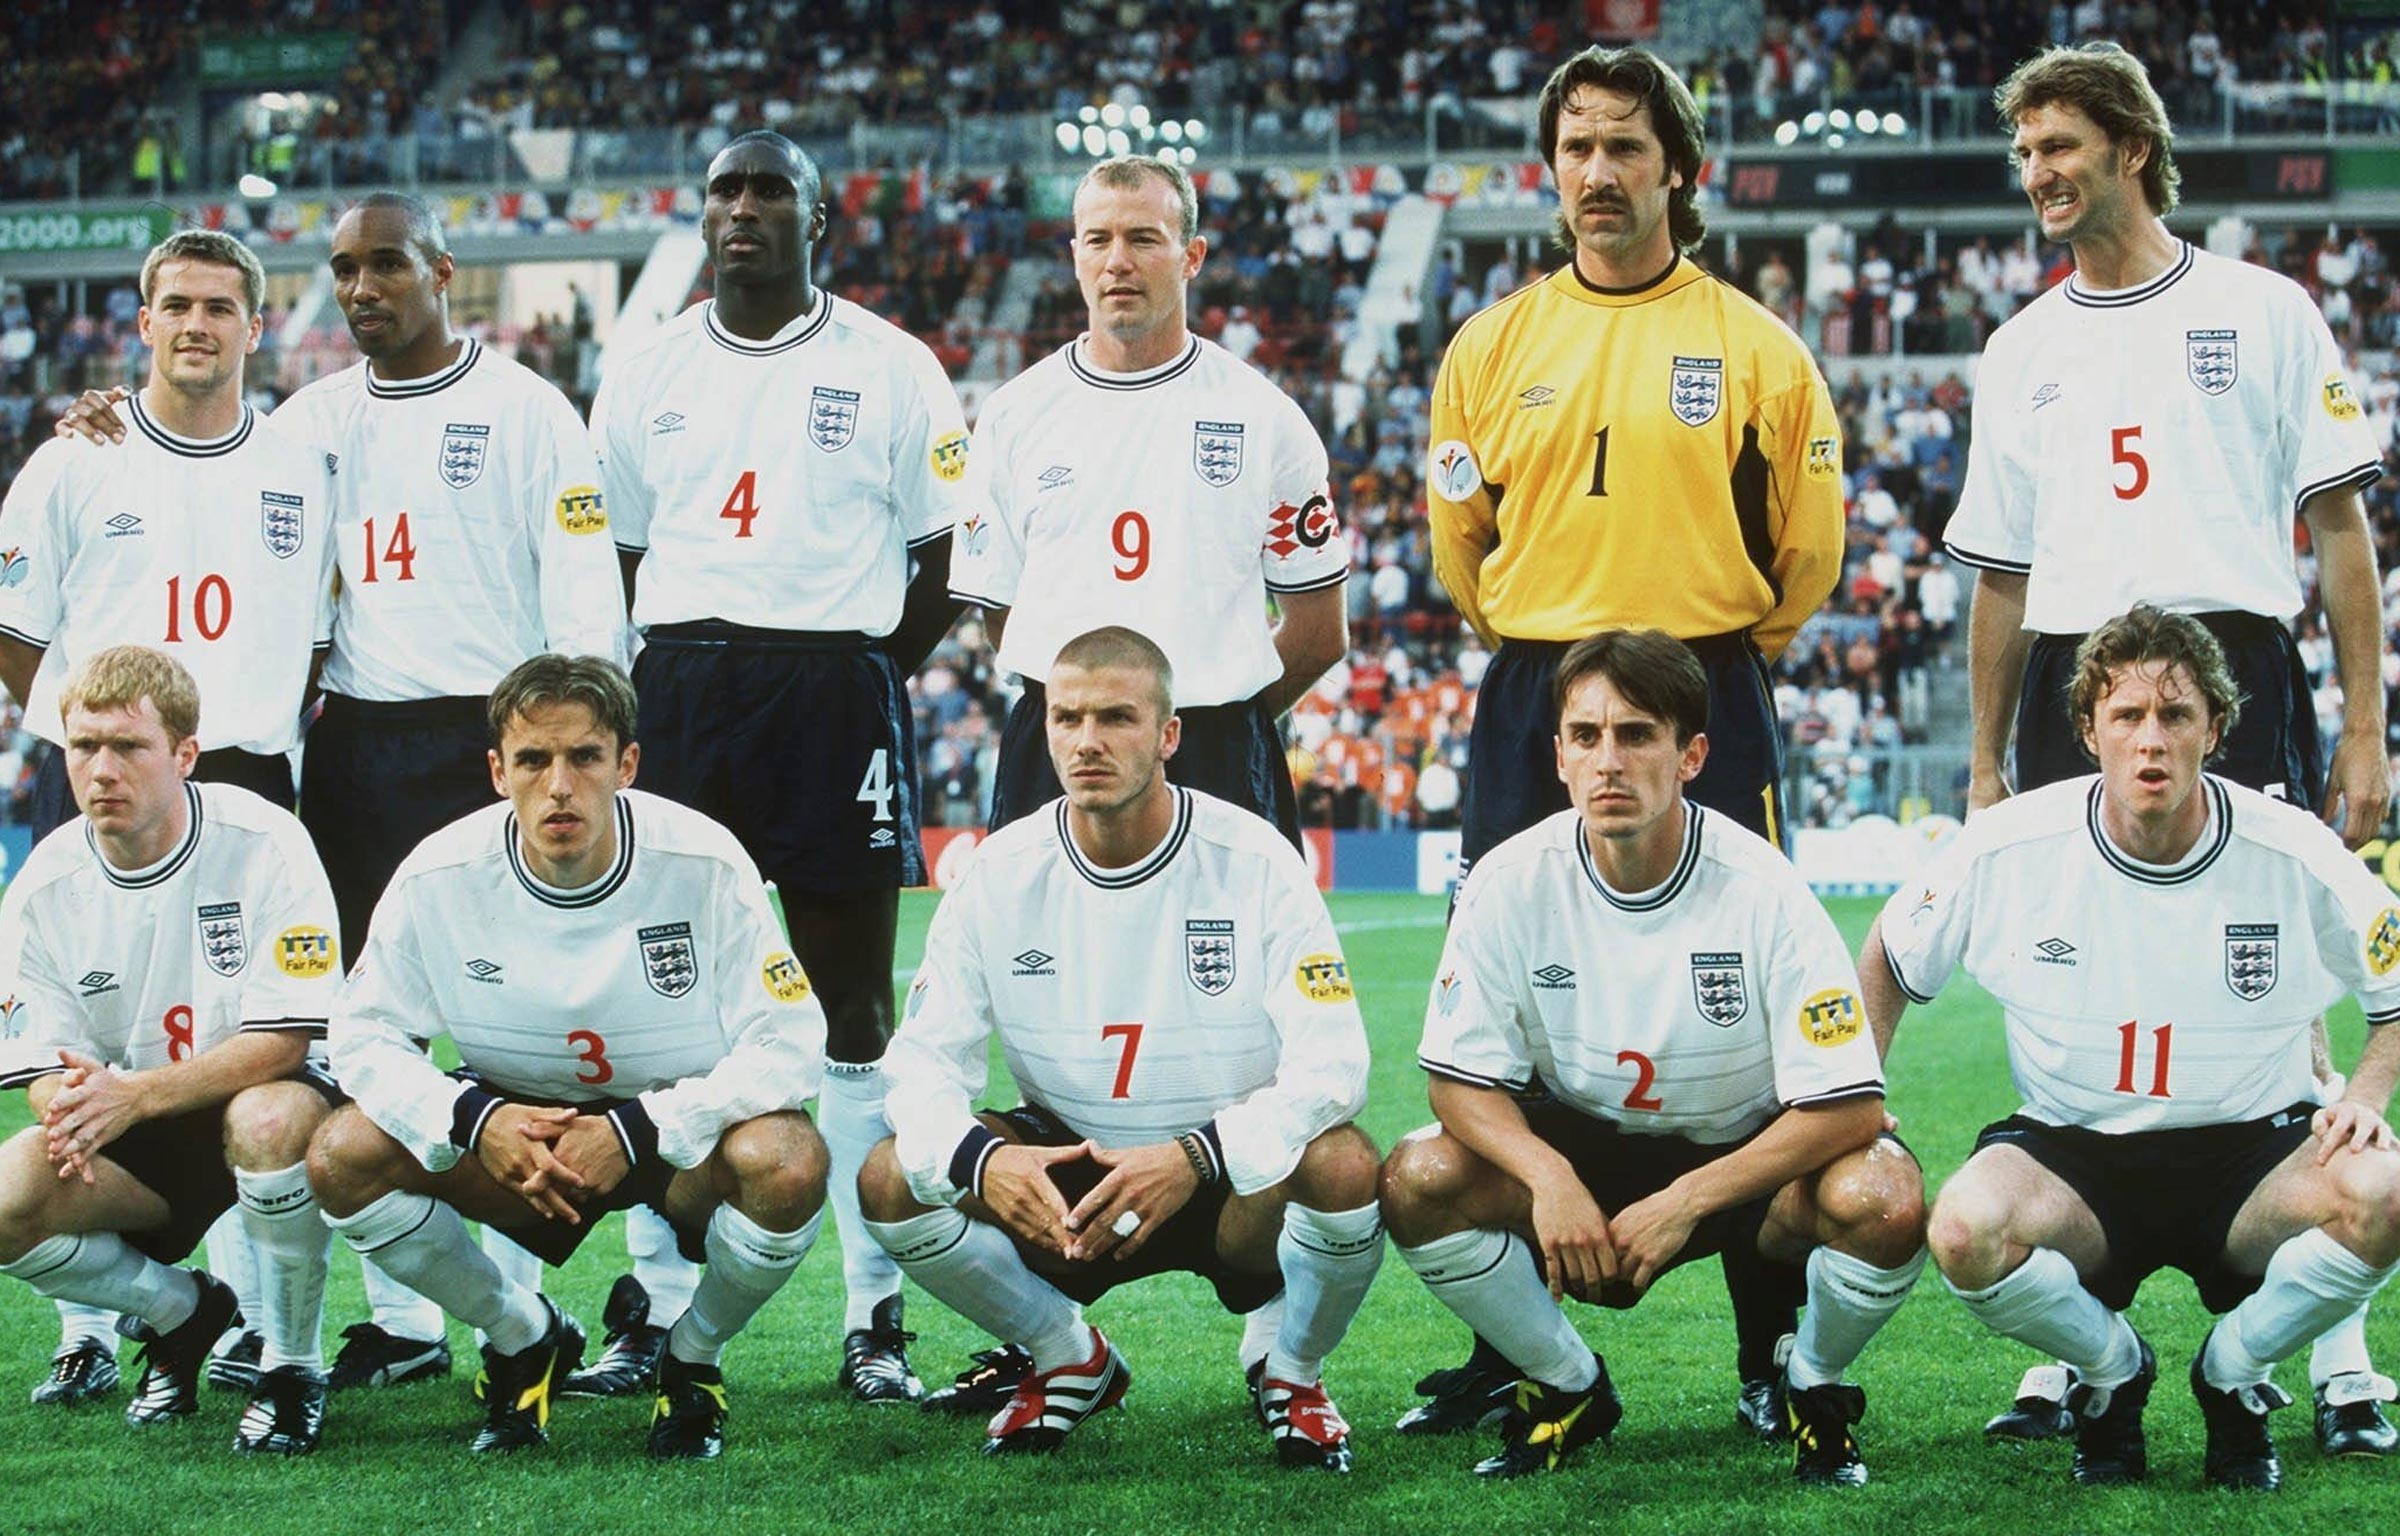 England's team in the Netherlands in 2000: (top row L-R) Michael Owen, Paul Ince, Sol Campbell, Alan Shearer, David Seaman, Tony Adams. (Bottom row L-R) Paul Scholes, Phil Neville, David Beckham, Gary Neville and Steve McManaman.